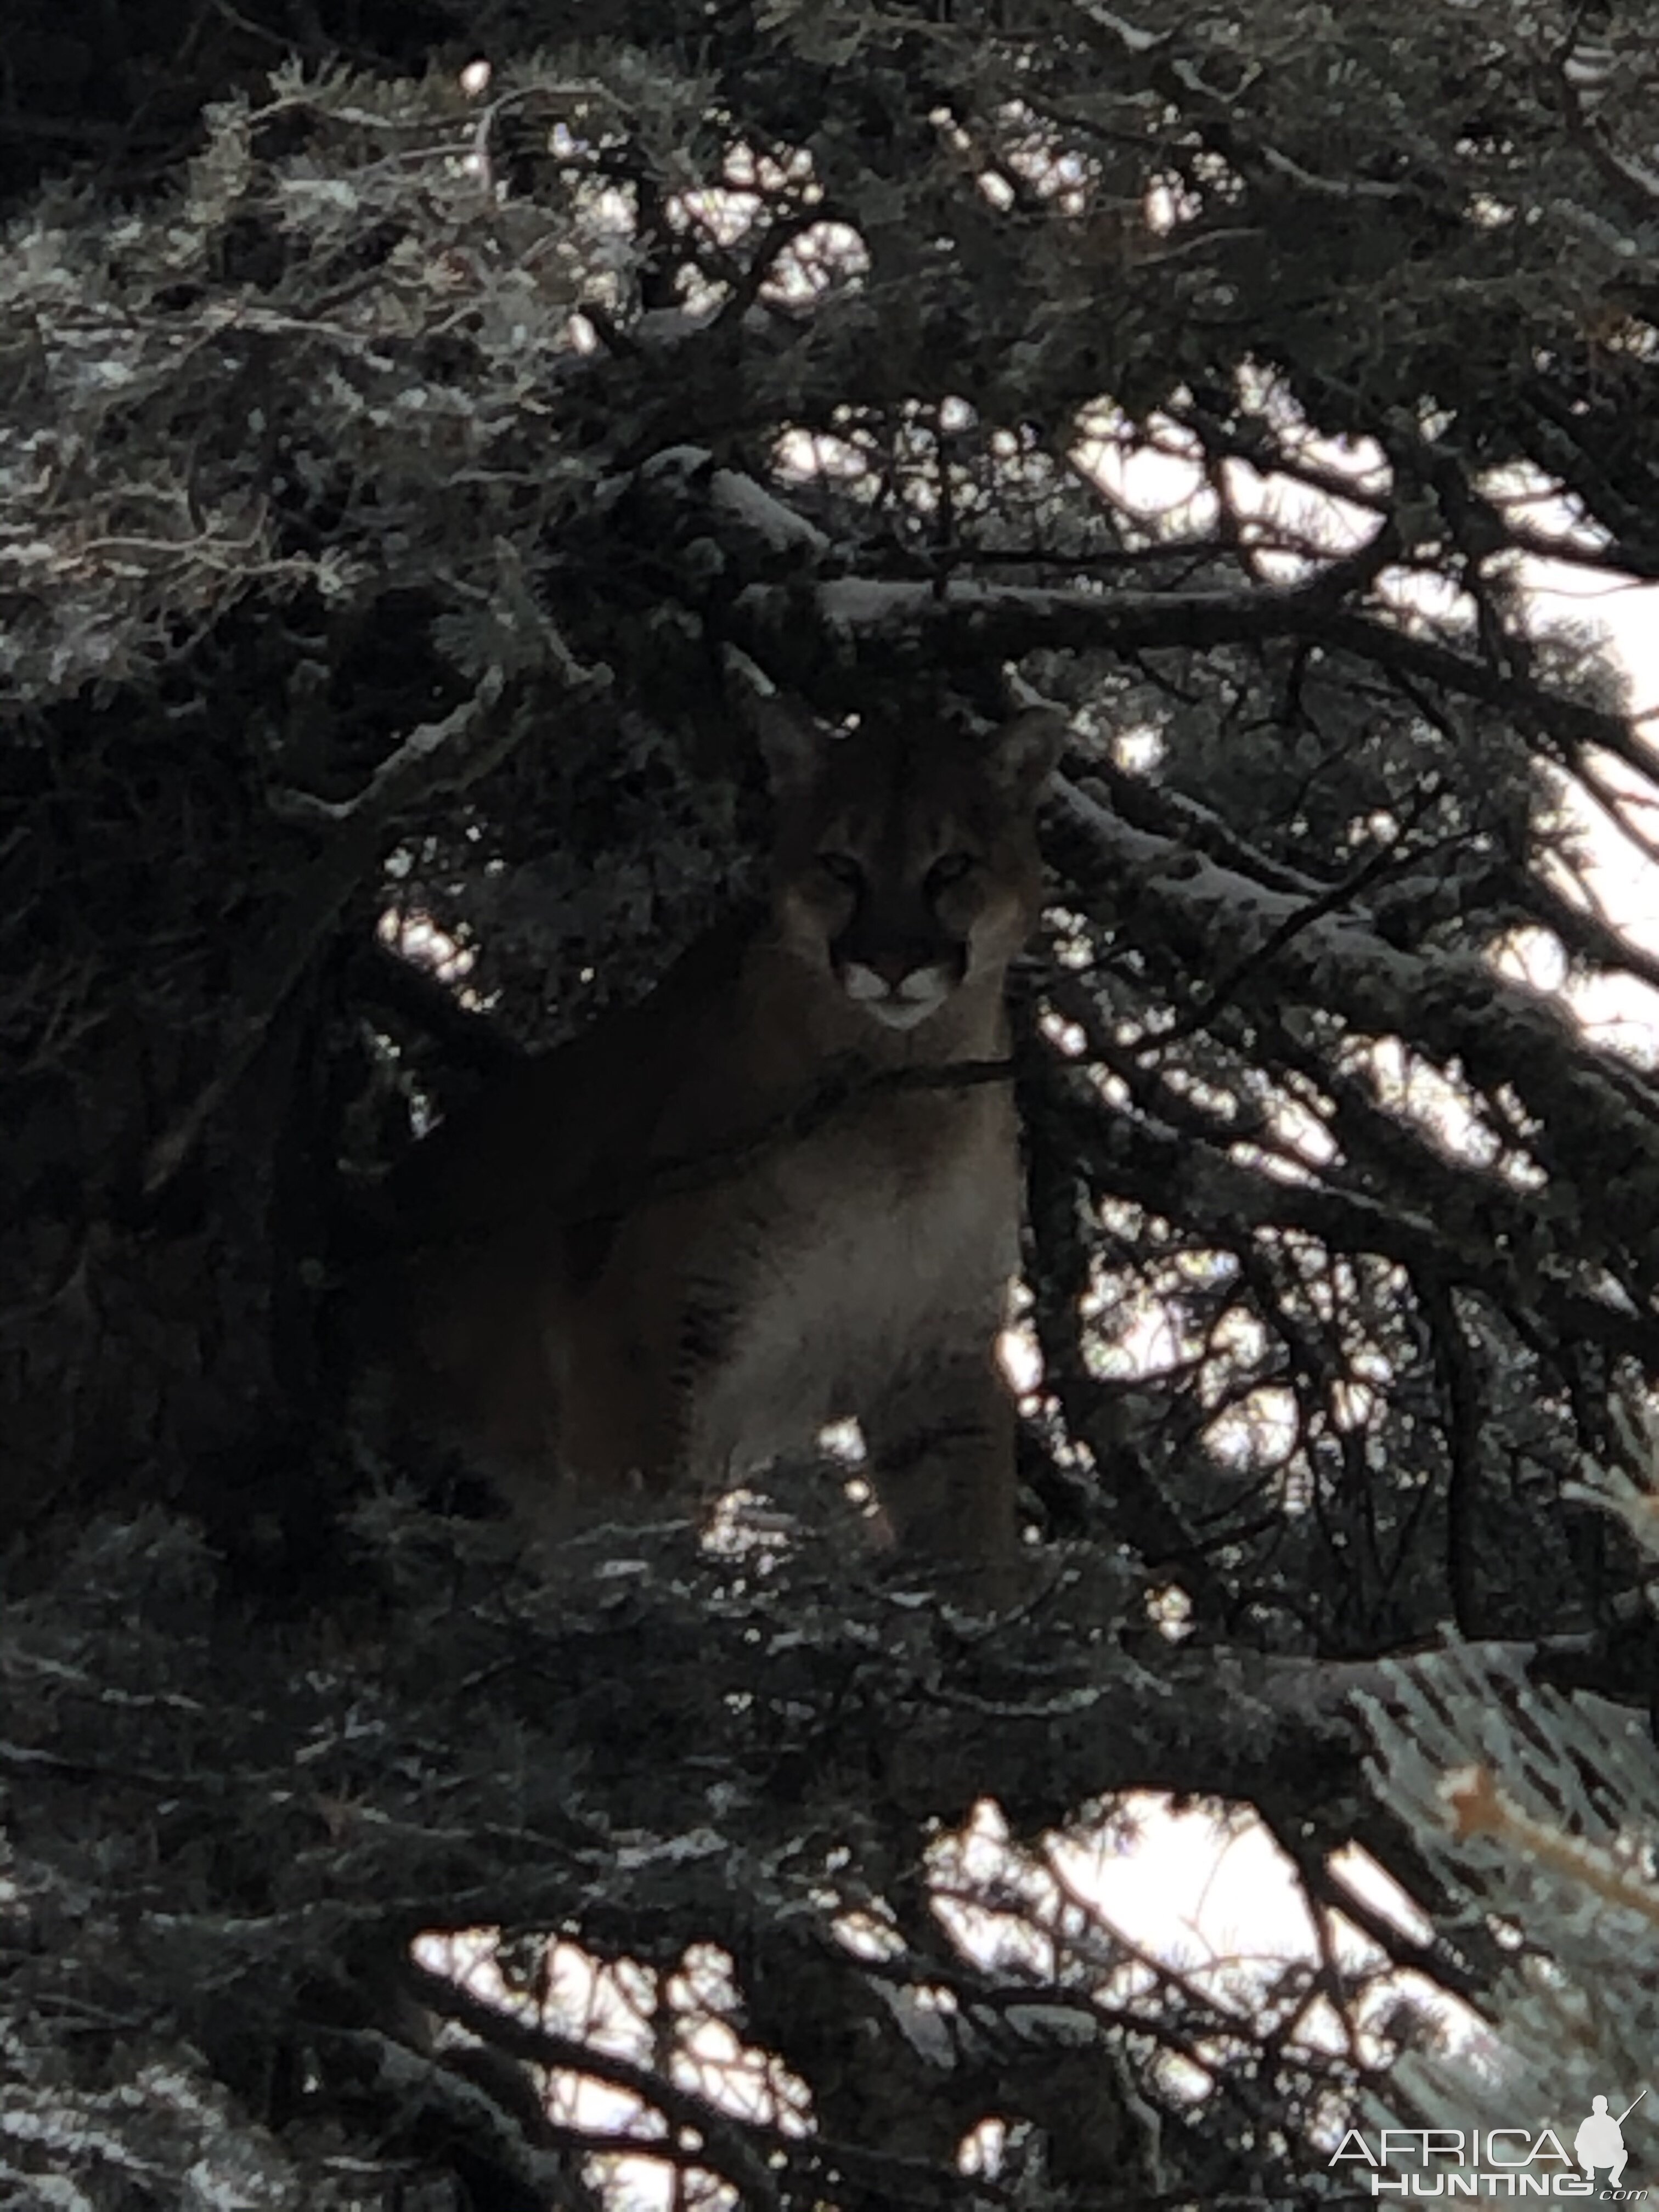 Mountain Lion in tree New Mexico USA